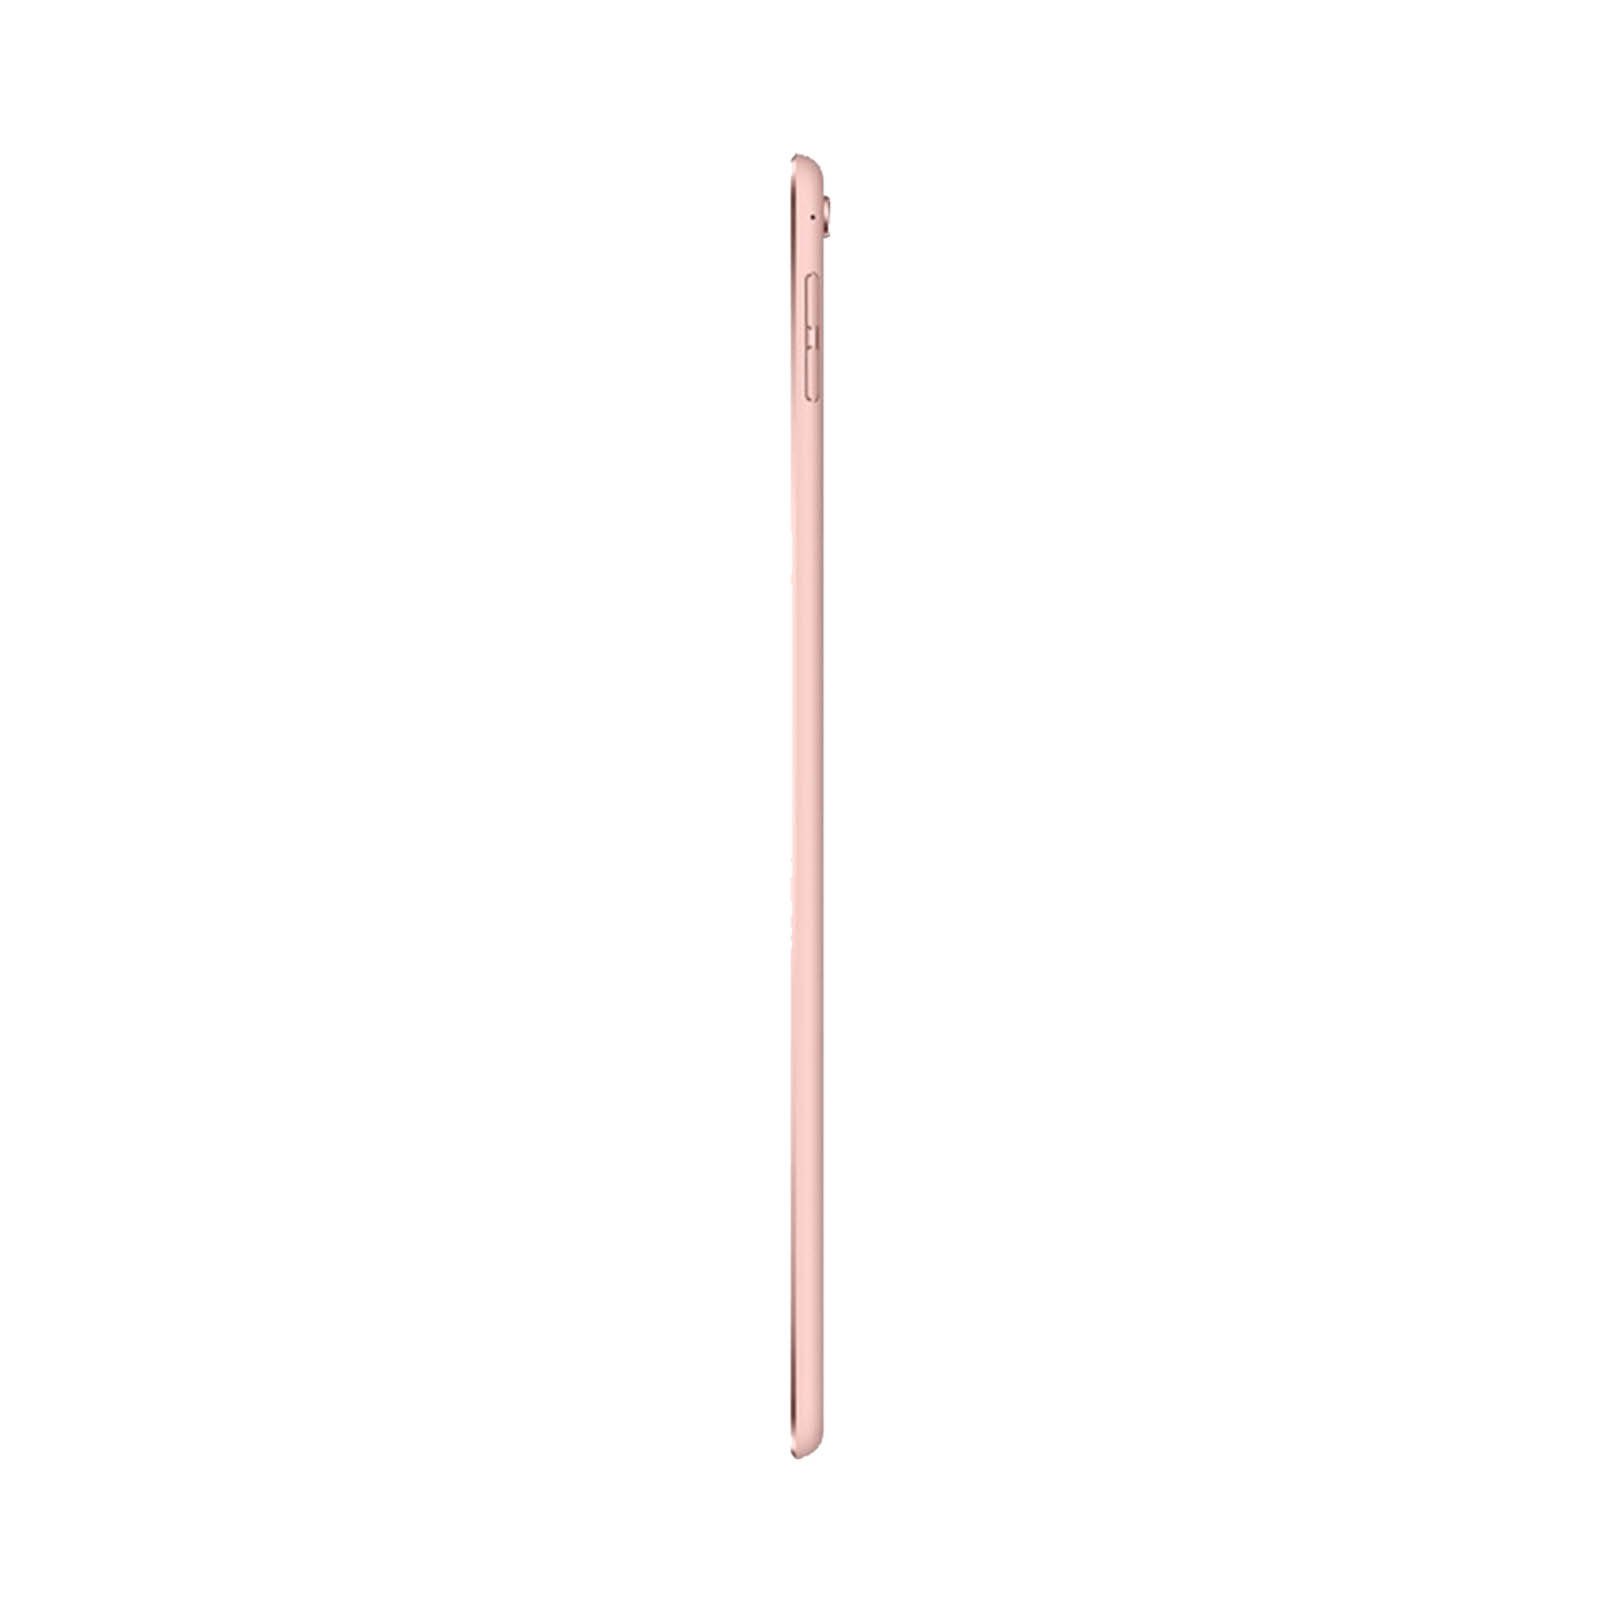 iPad Pro 9.7 Inch 32GB Rose Gold Pristine - Unlocked